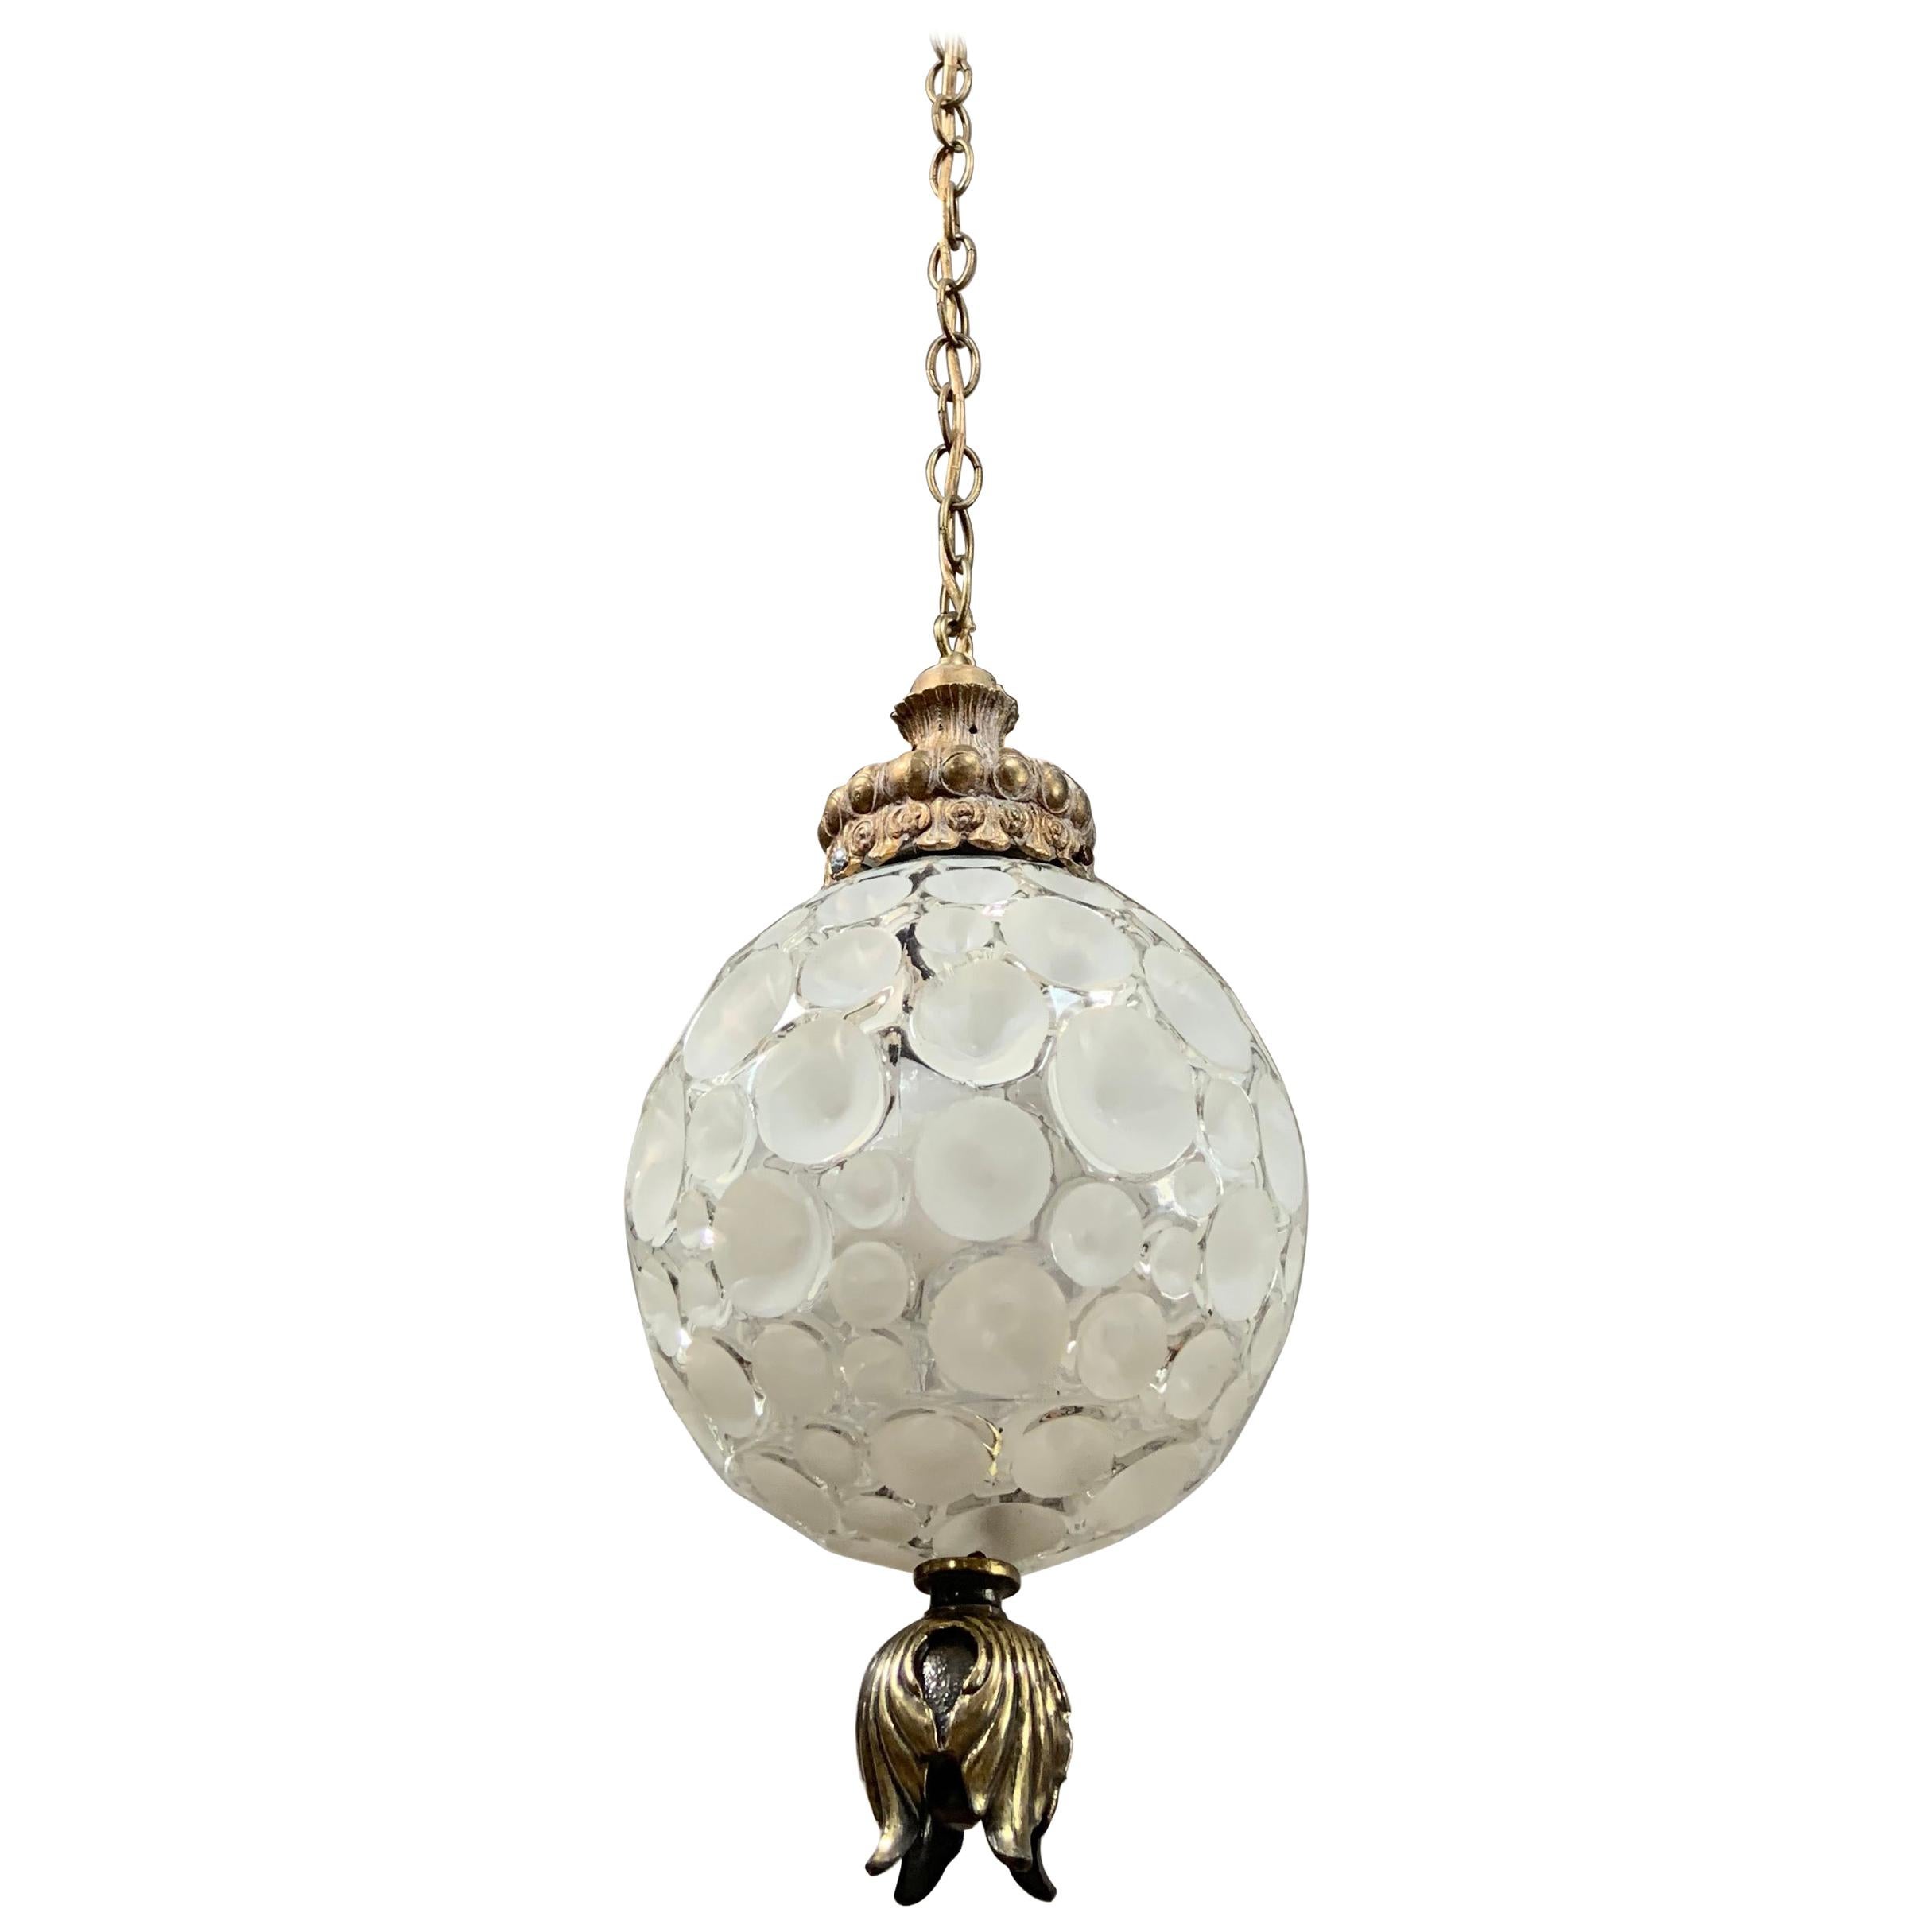 Antique Textured Glass Globe Pendant with Original Brass Fixture